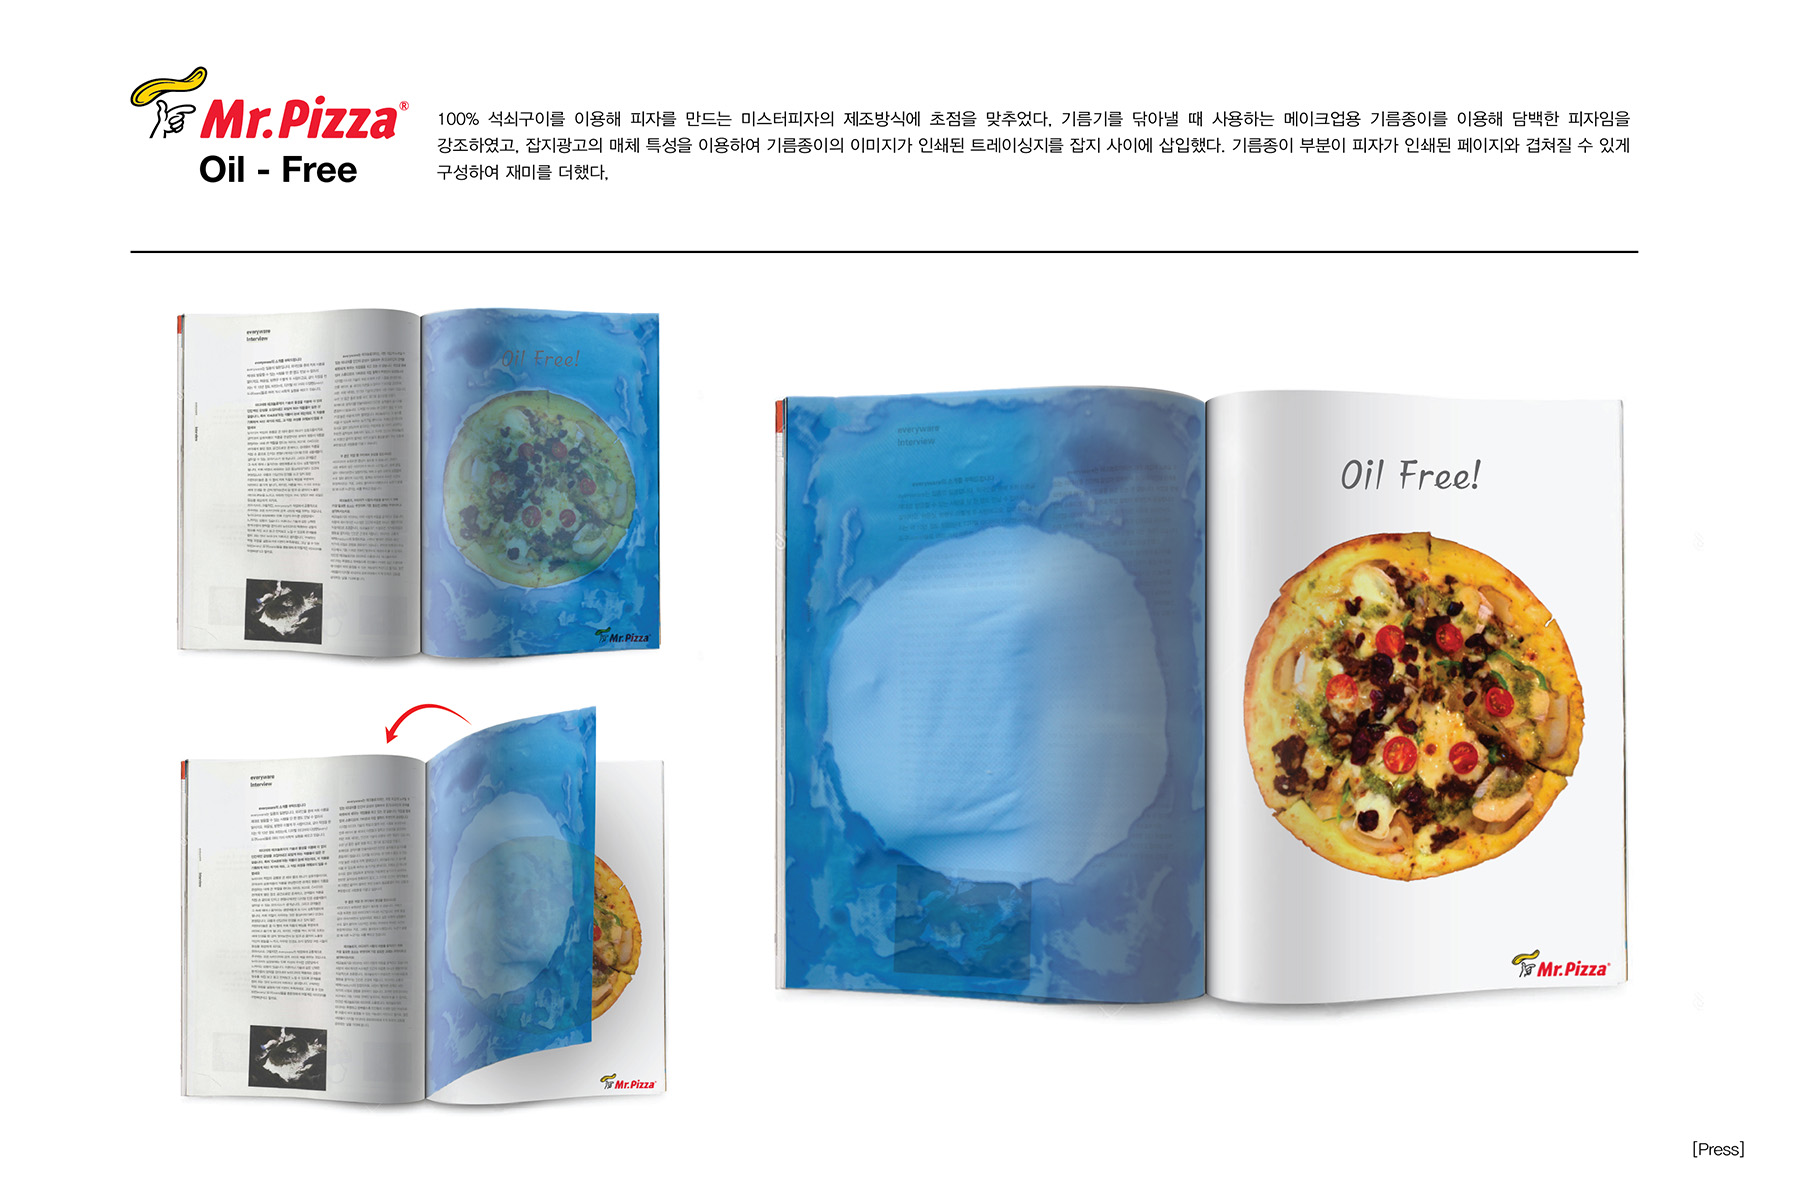 oil_free_pizza.jpg